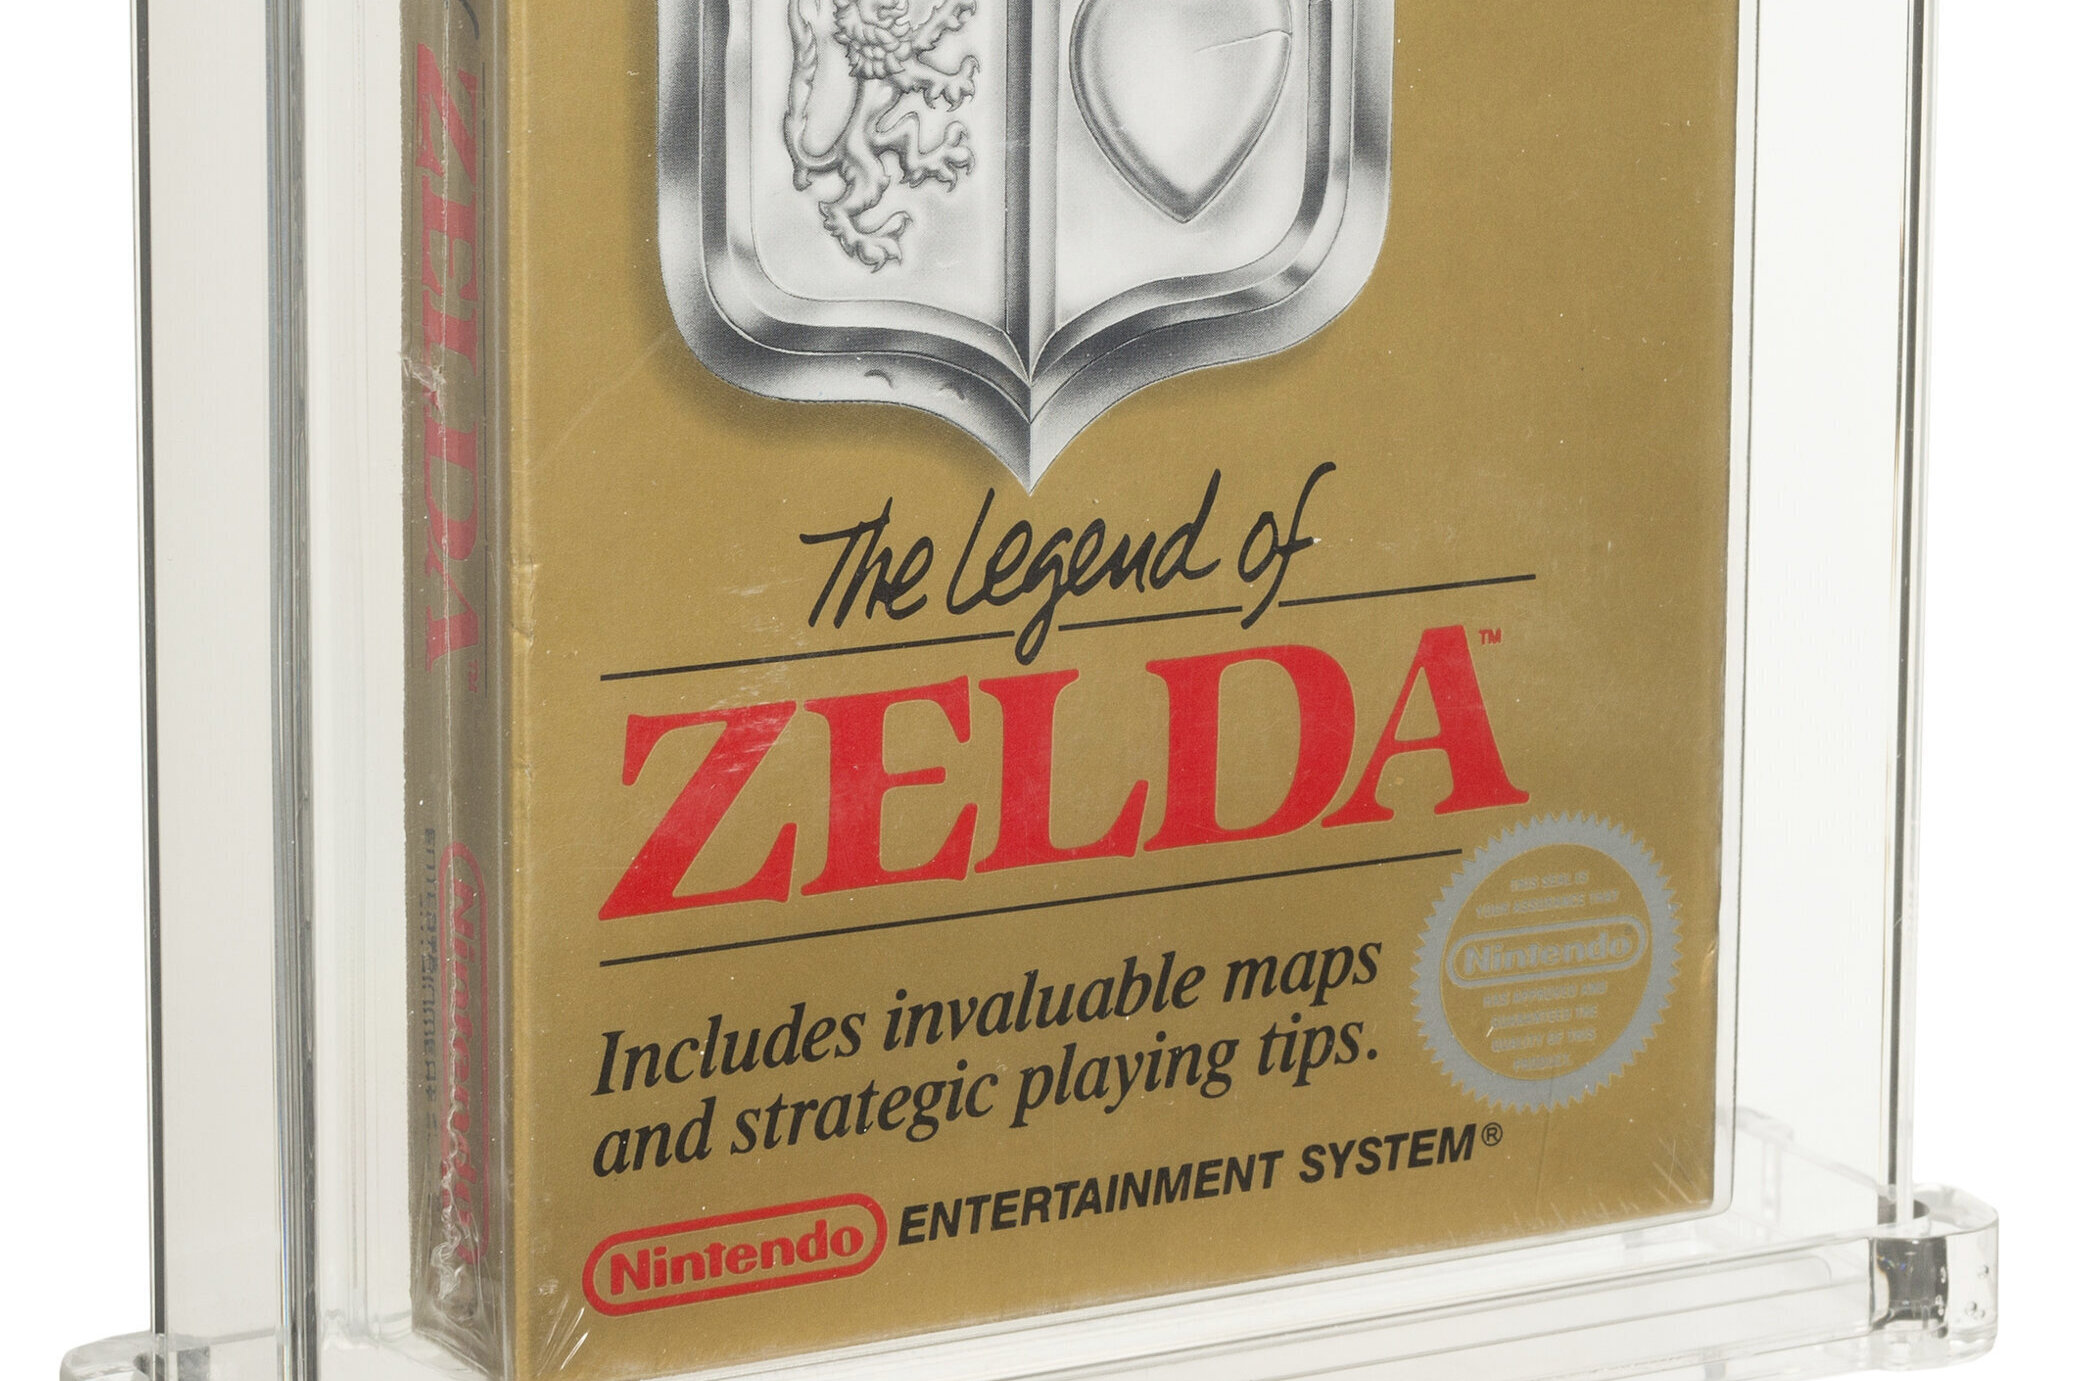 All] Have Any Zelda Games Surpassed the First Zelda Game You Played? : r/ zelda